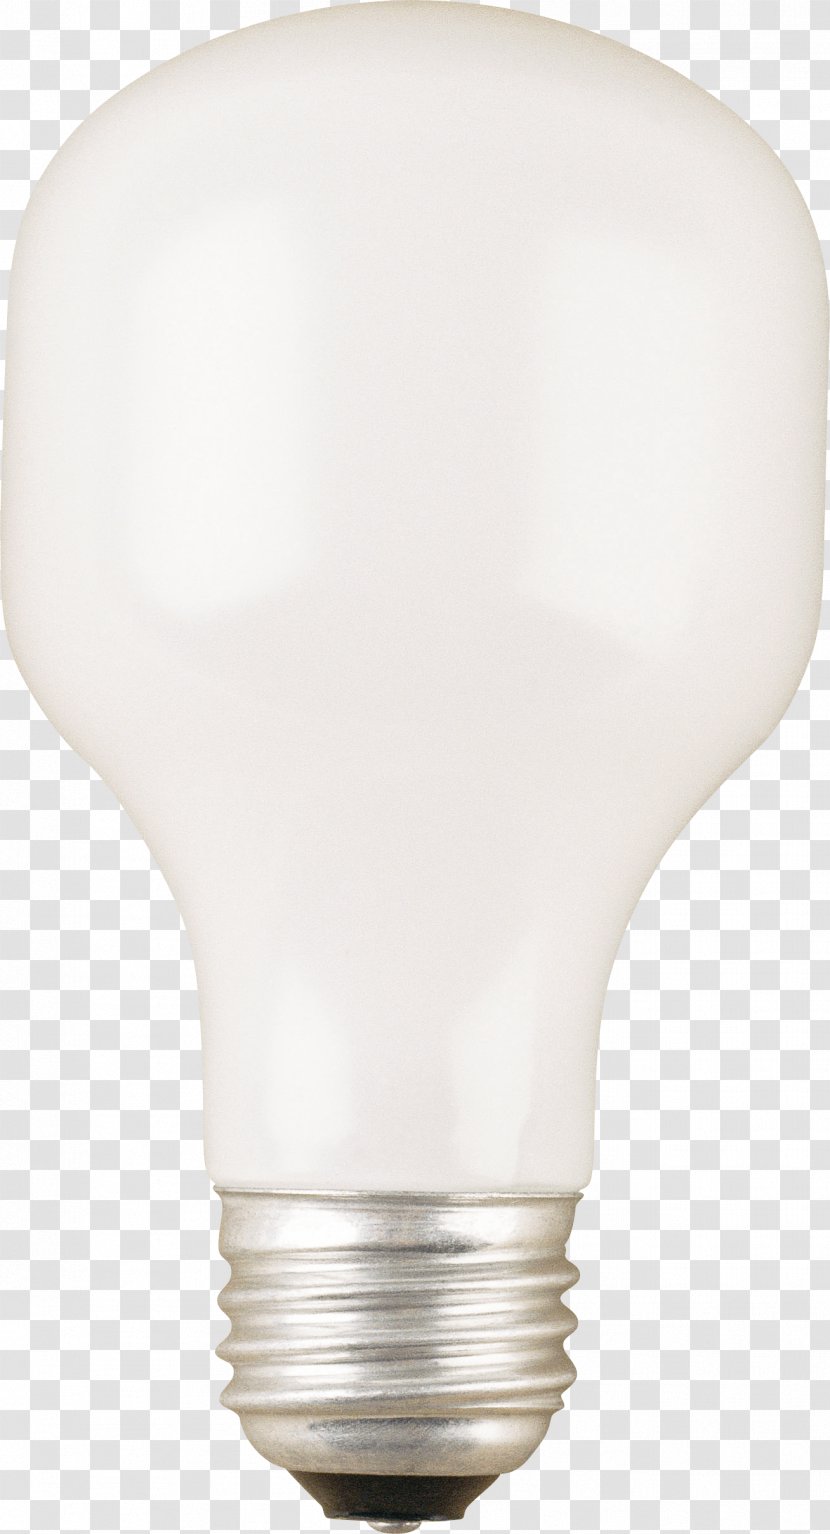 Lighting Design Product - Lamp Image Transparent PNG